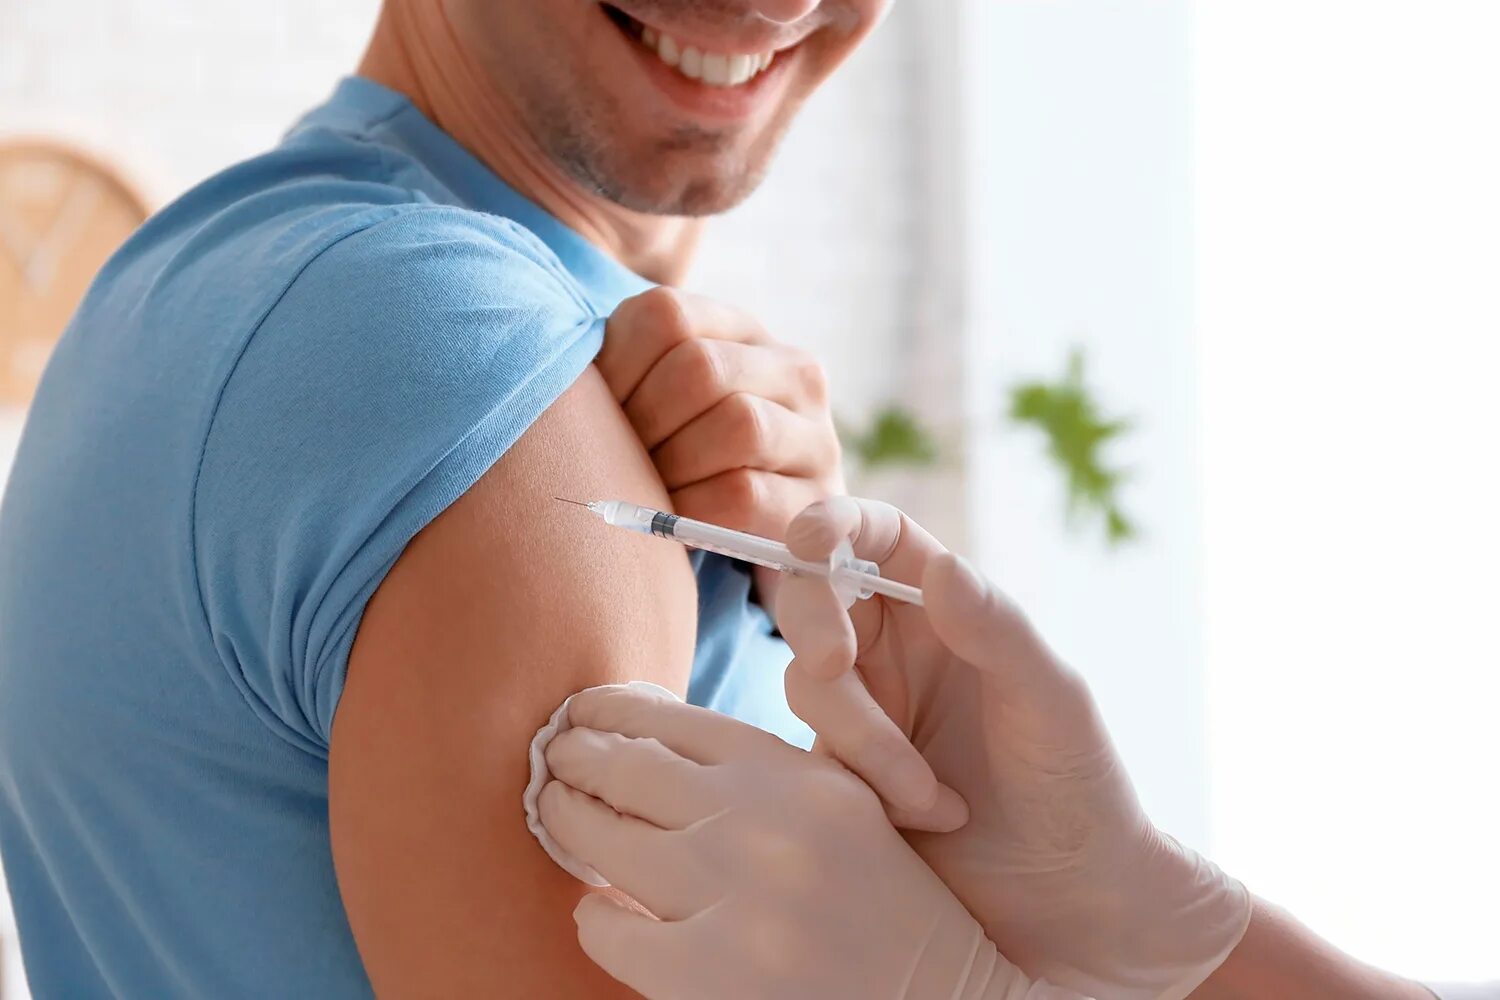 Вакцинация фото. Введение вакцины в плечо. Прививка взрослому мужчине.